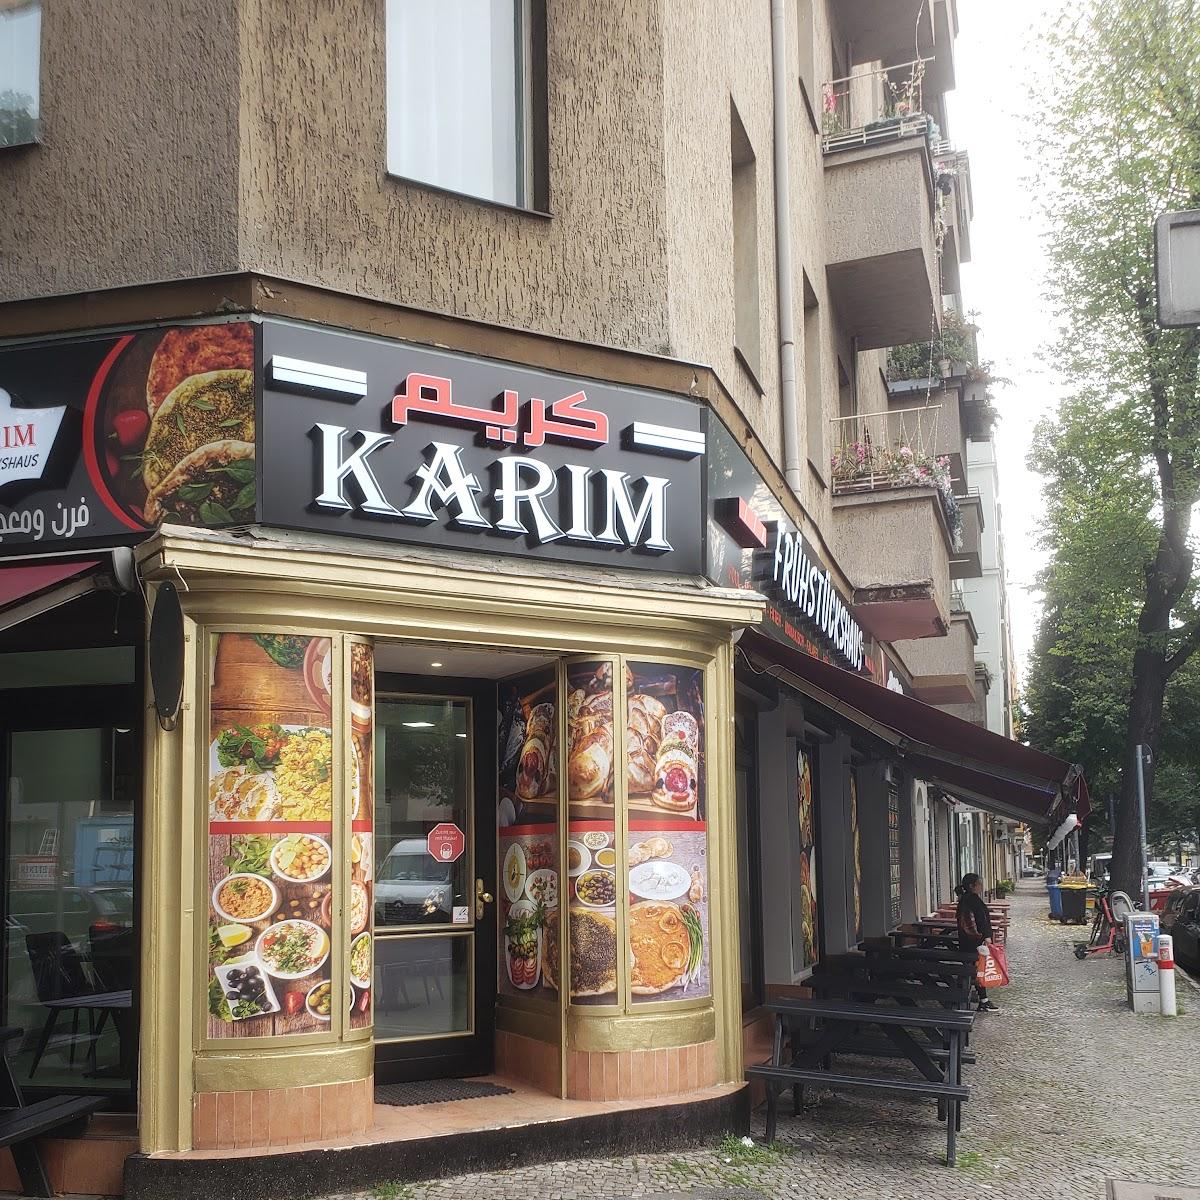 Restaurant "Karim - Frühstückshaus Berlin" in Berlin